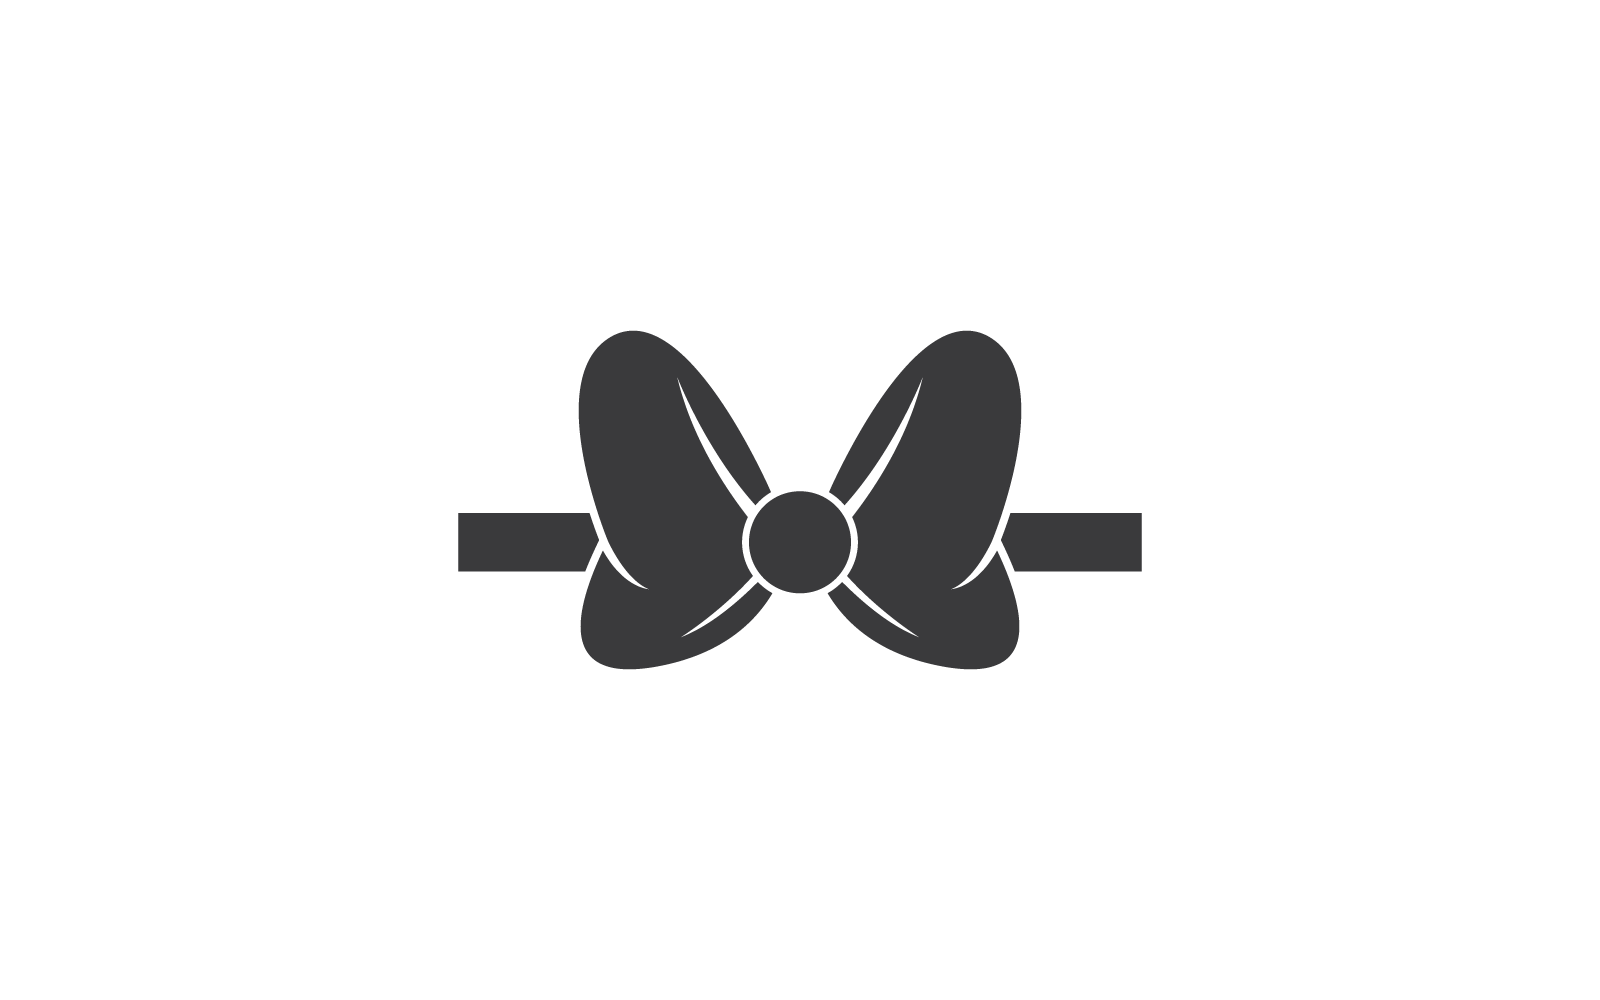 Bow tie logo illustration flat design